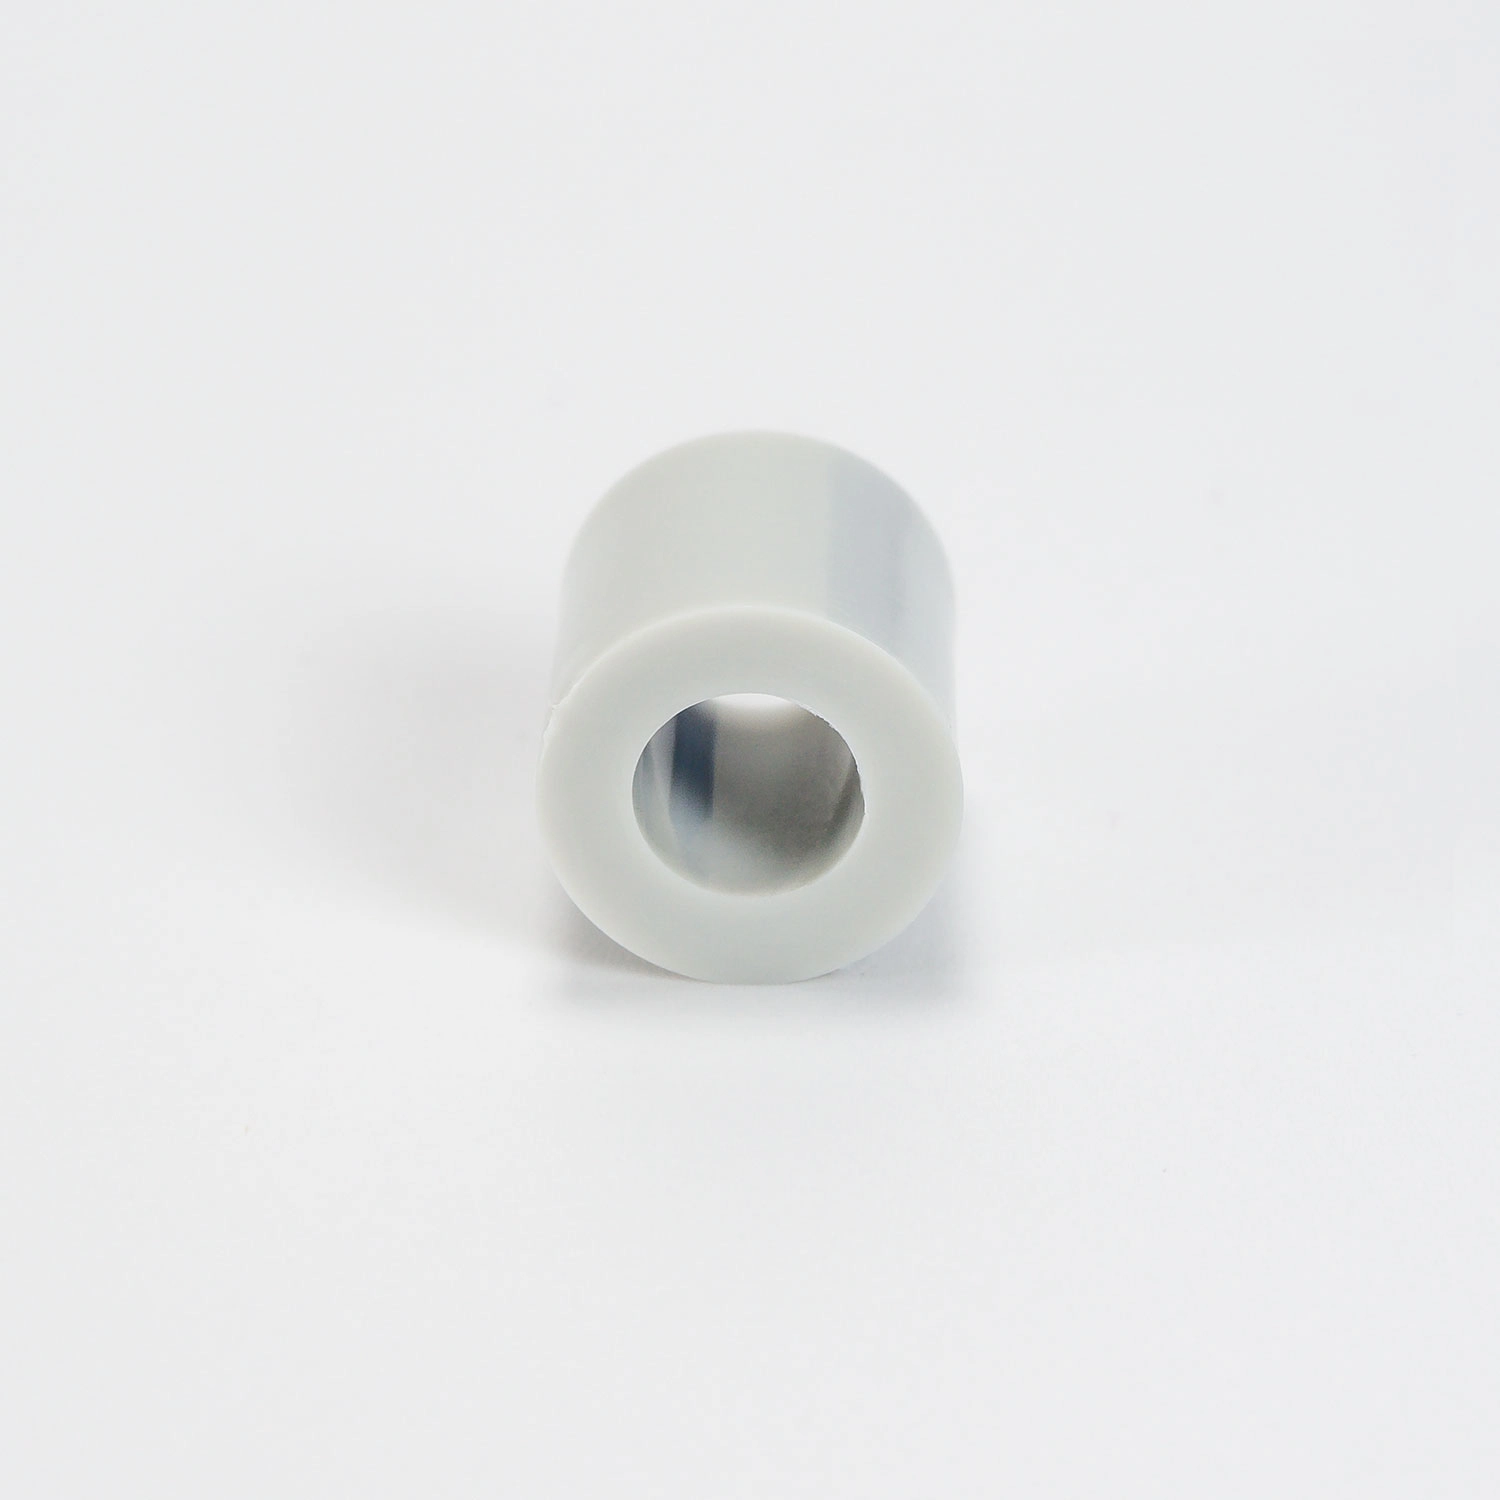 Distanzhülse in Grau aus Kunststoff 12mm